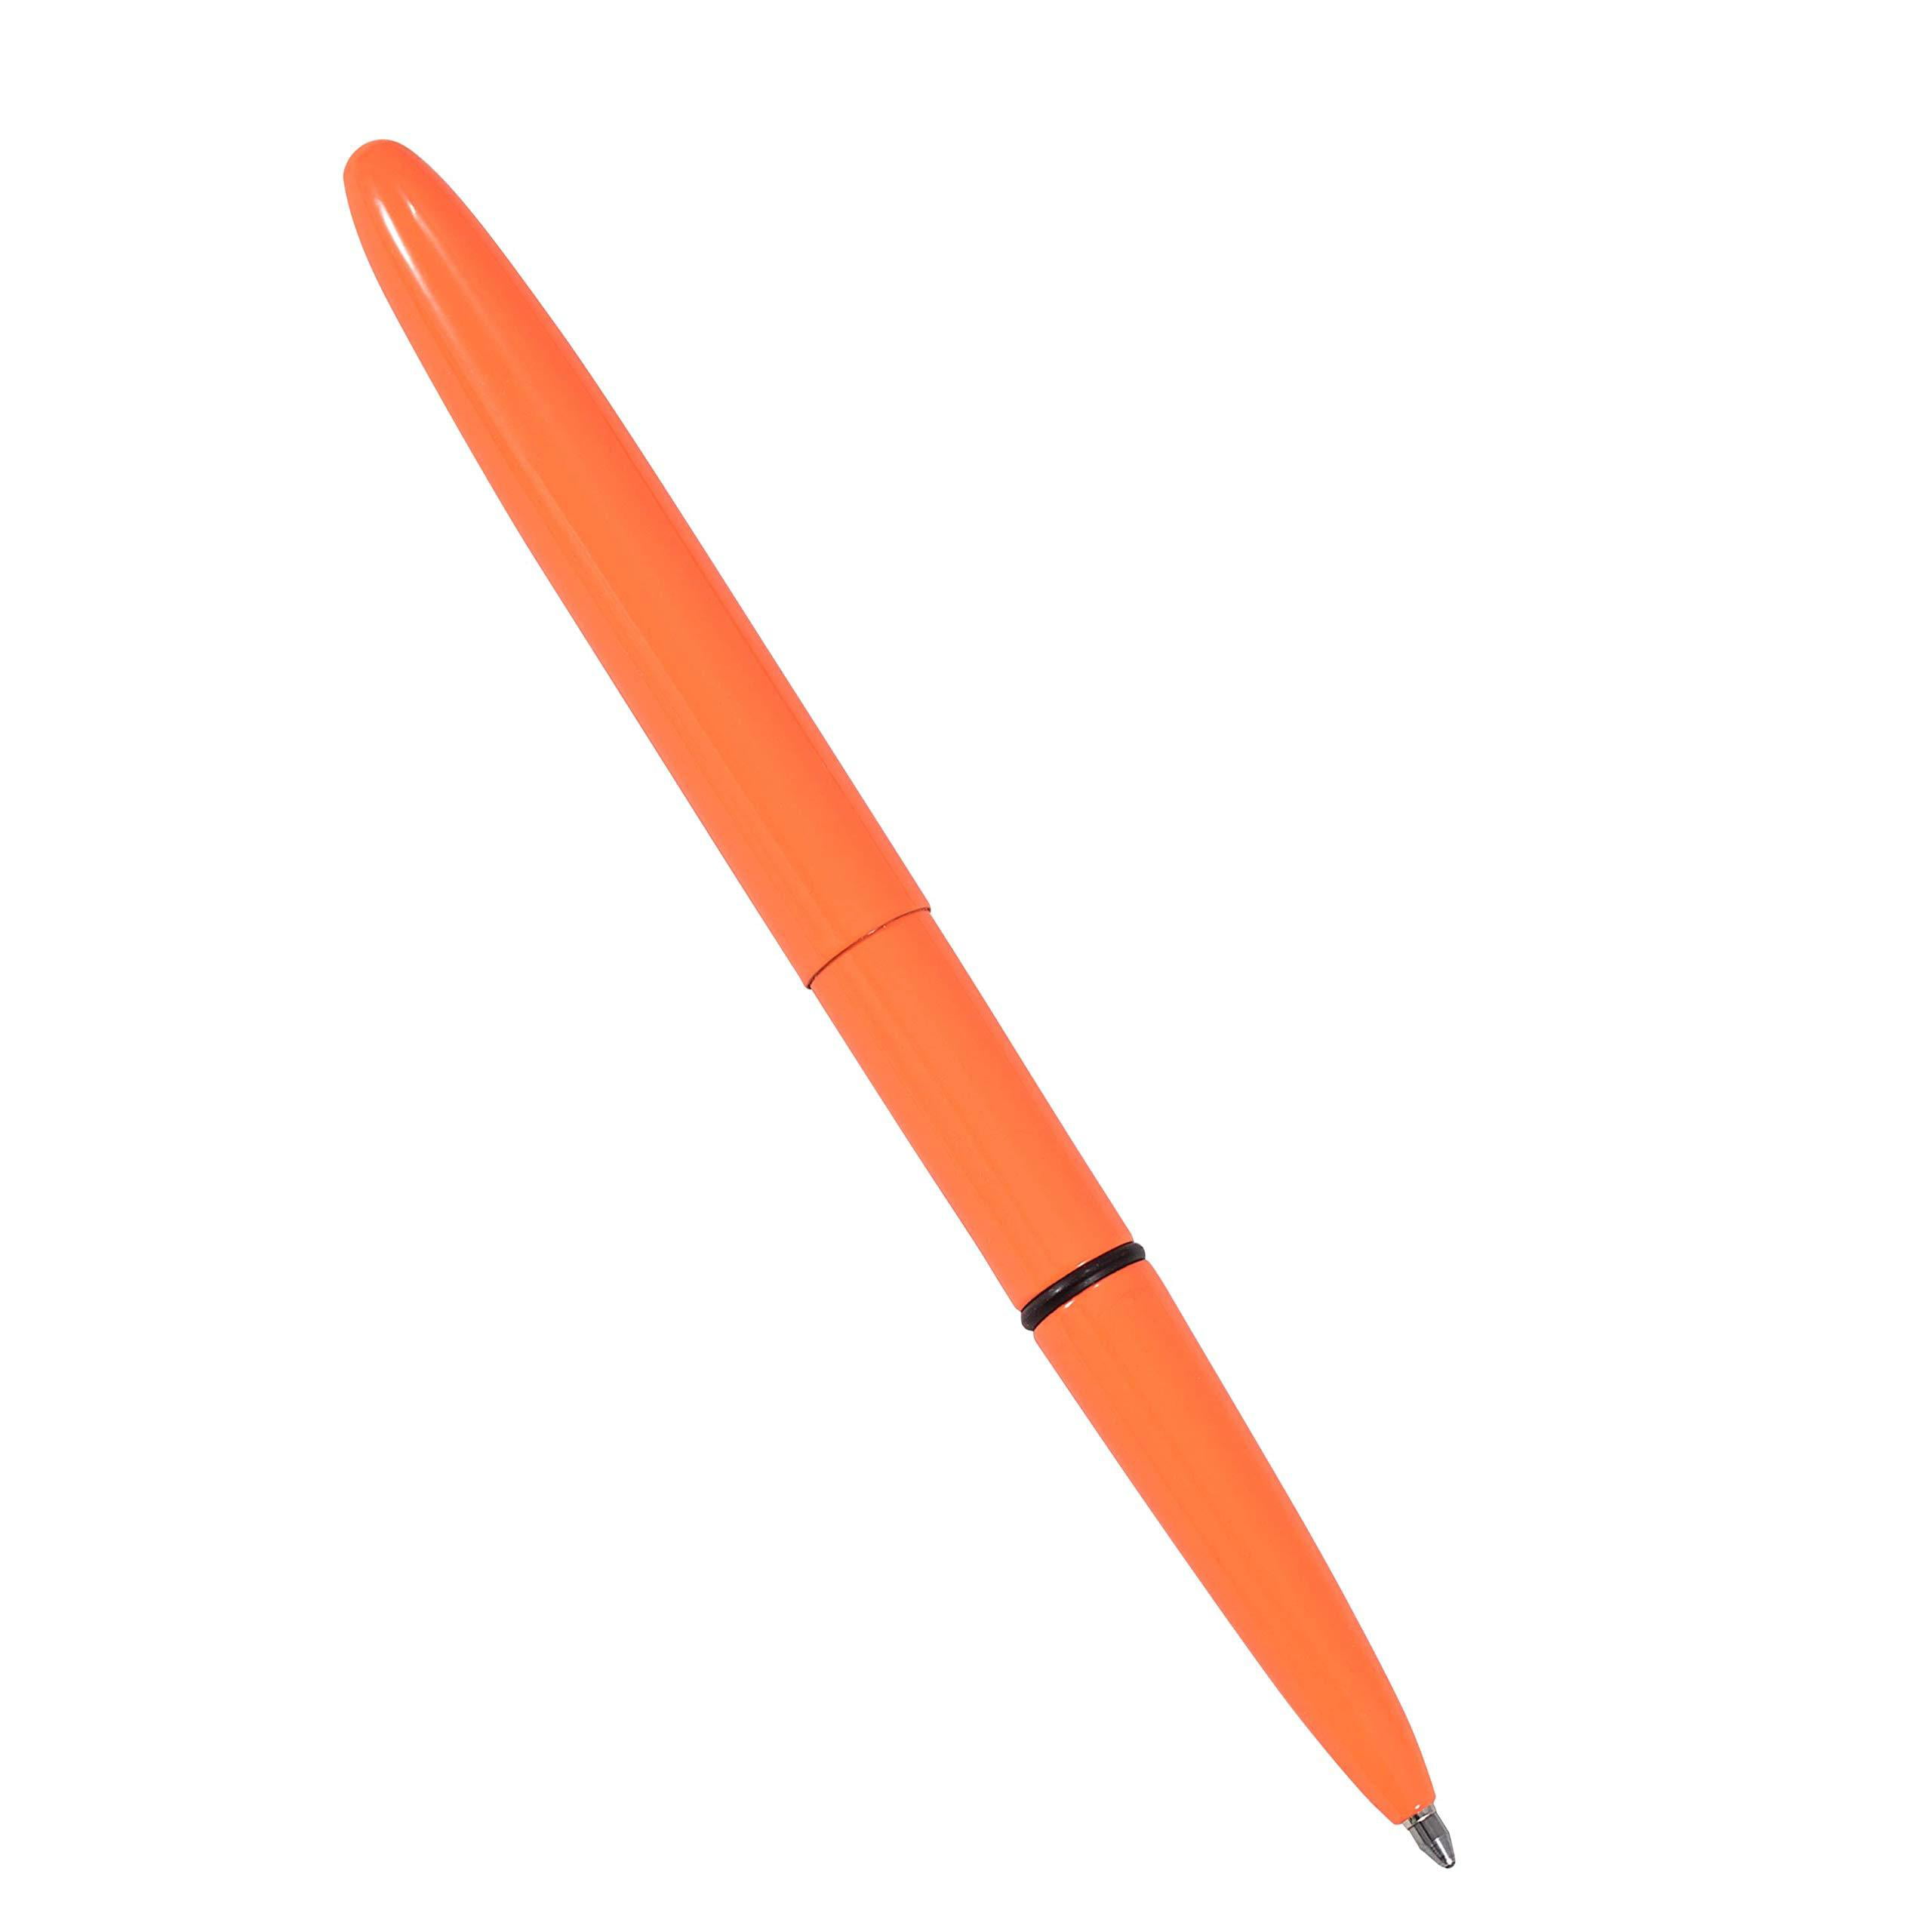 Rite in the Rain All-Weather Pen 2-Pack Orange - Blade HQ